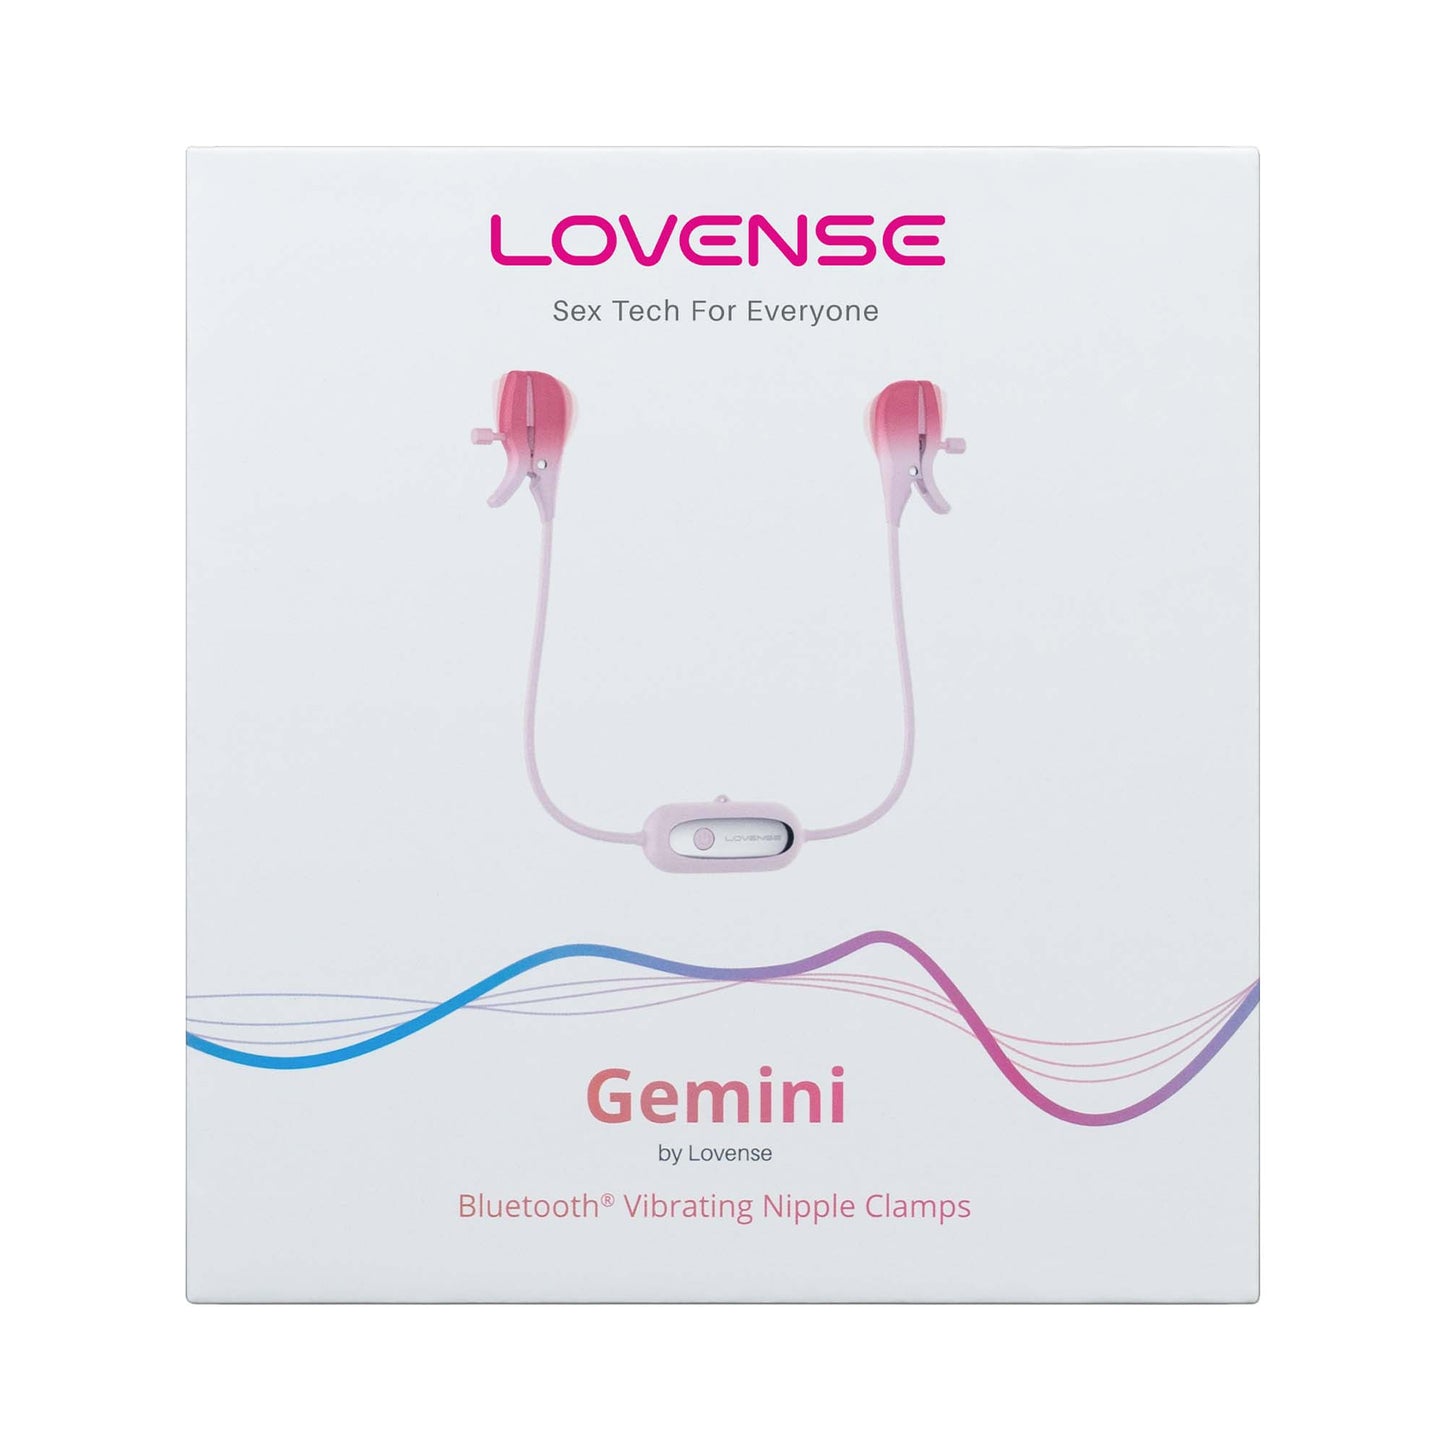 Gemini by Lovence